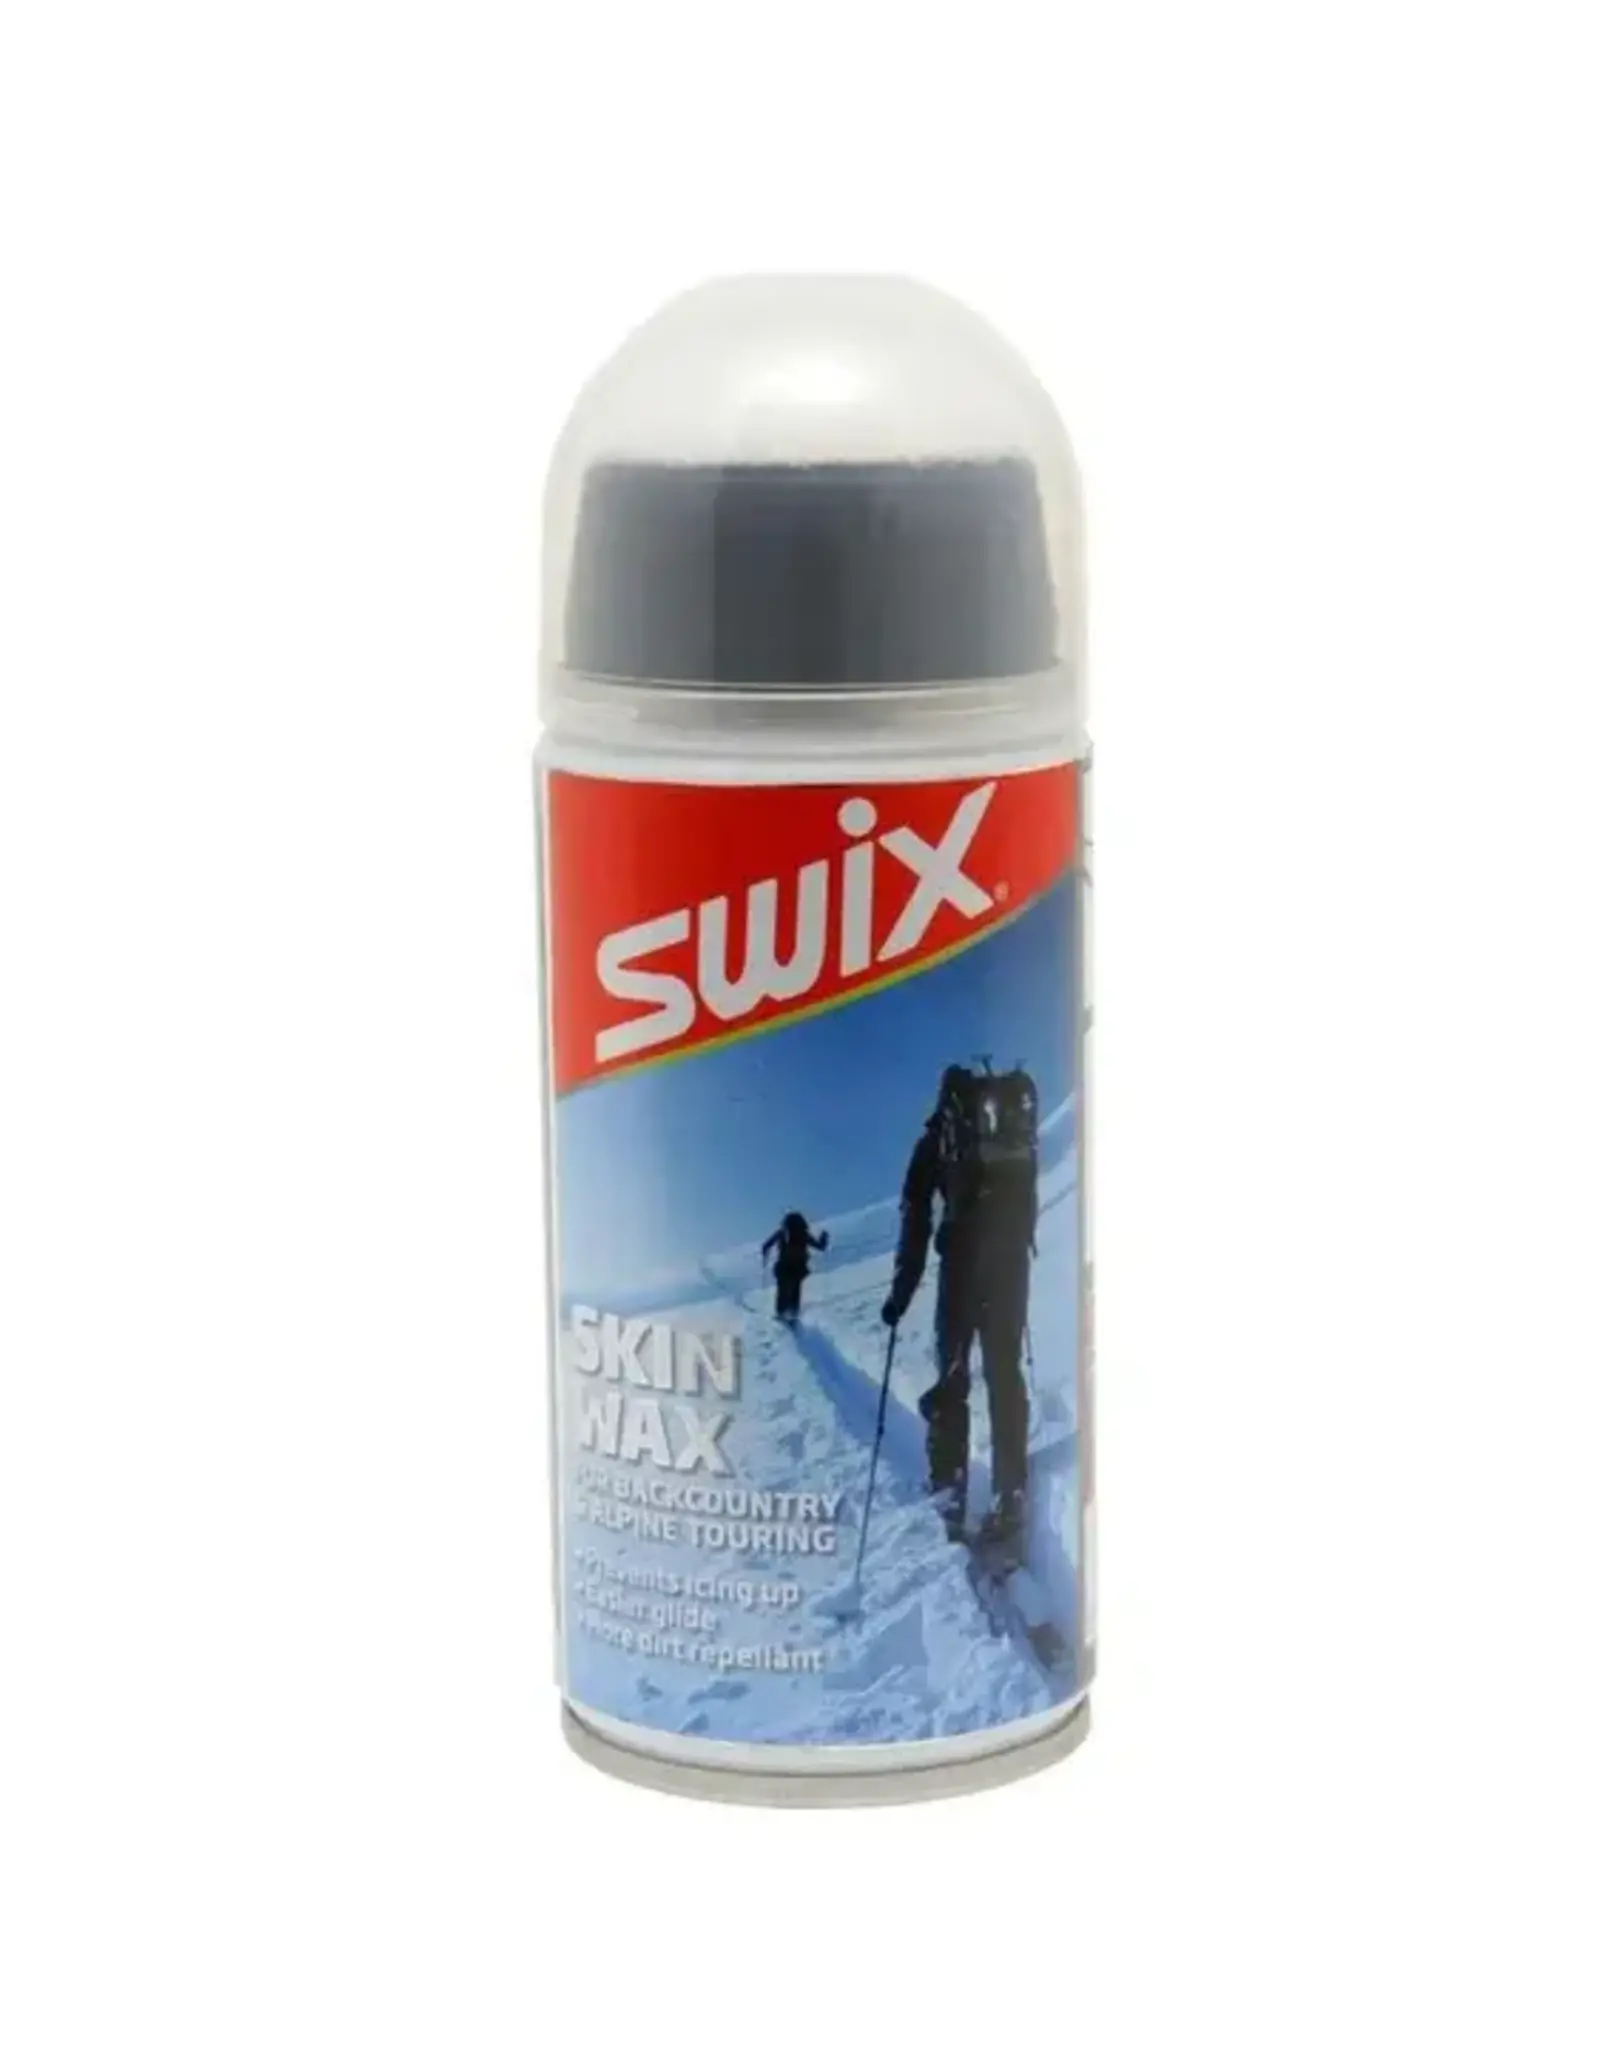 Swix Climbing skins wax, 150ml